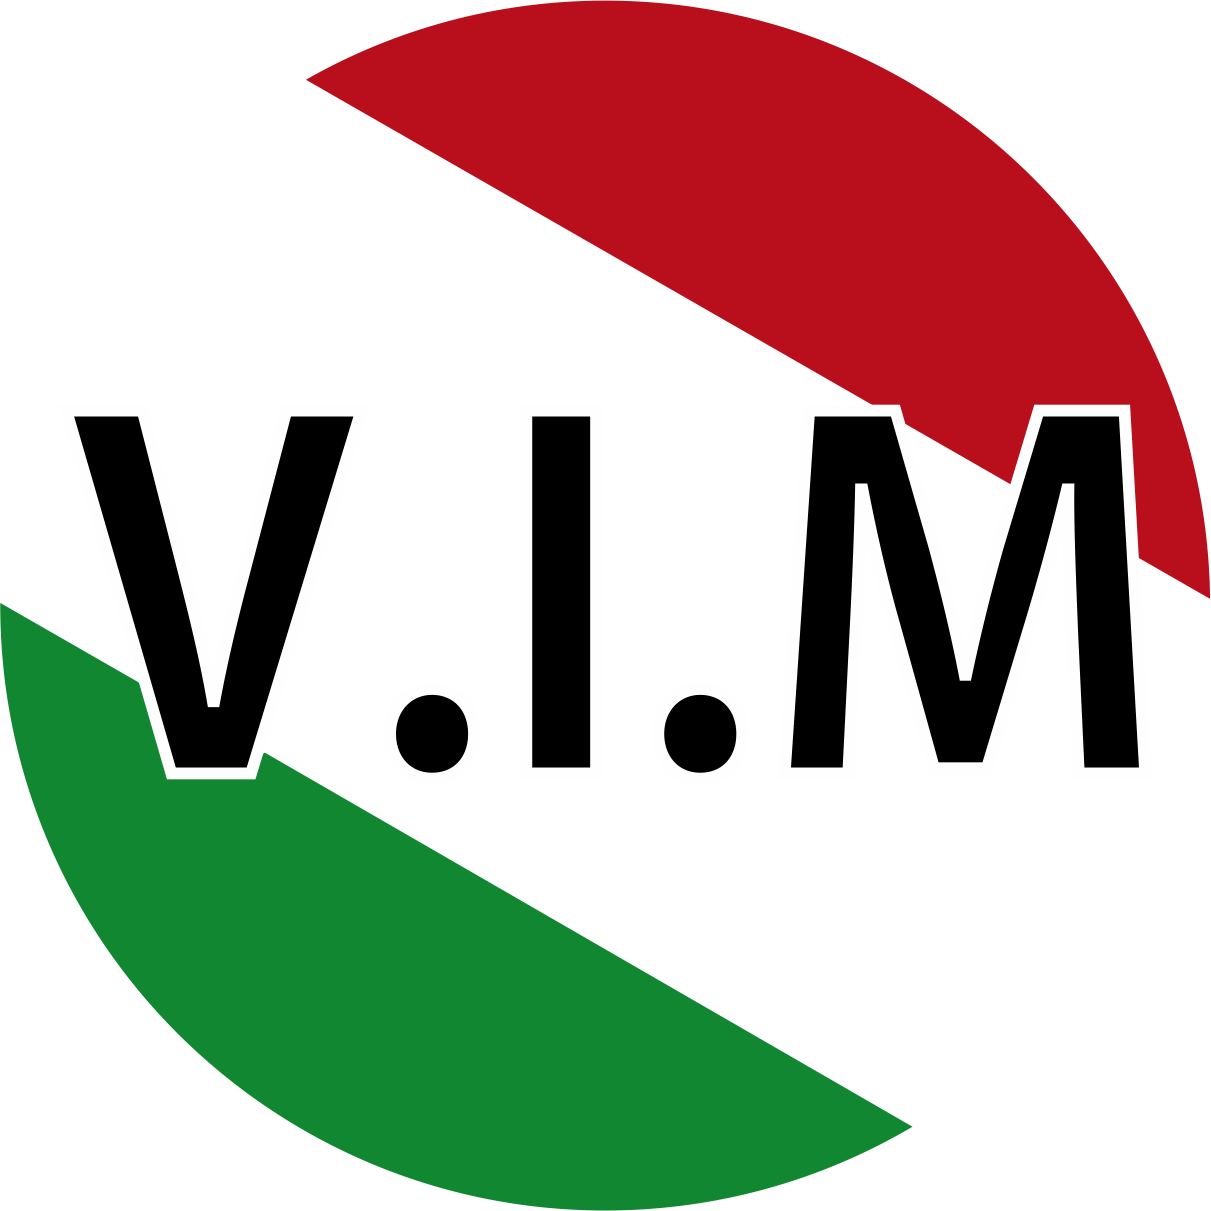 Welcome To Vim Pizza & Italian Restaurant - Vim Pizza & Italian Restaurant (1211x1211)